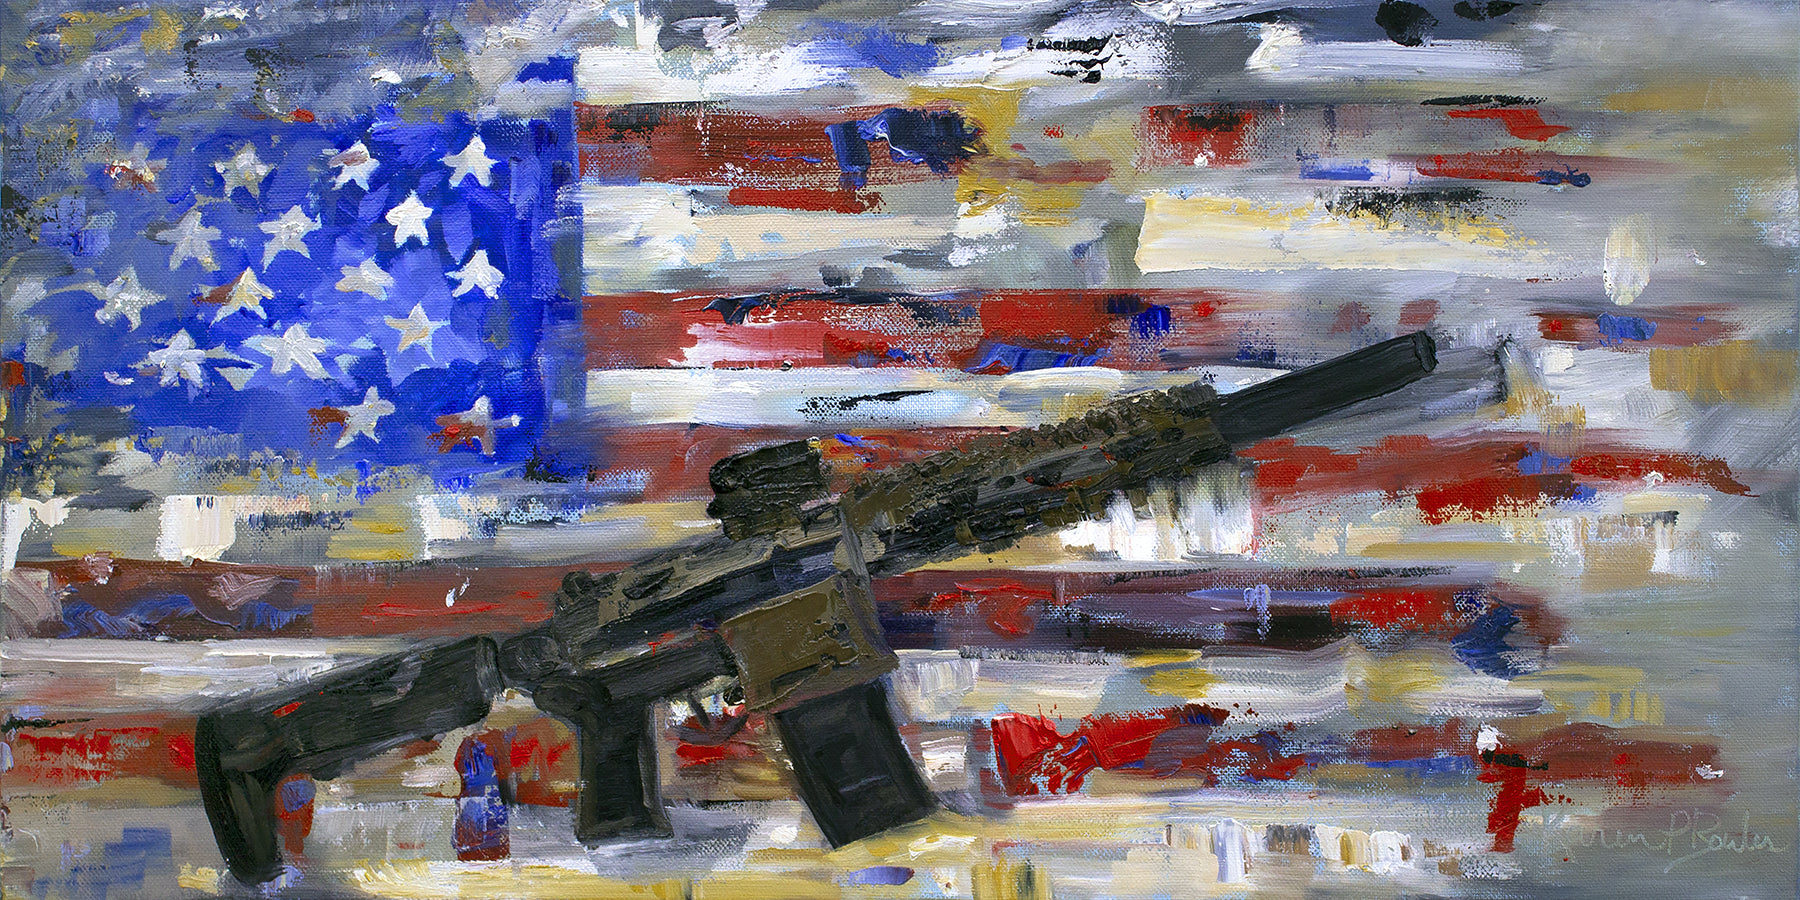 "America, America" - Print by Karen Bowles